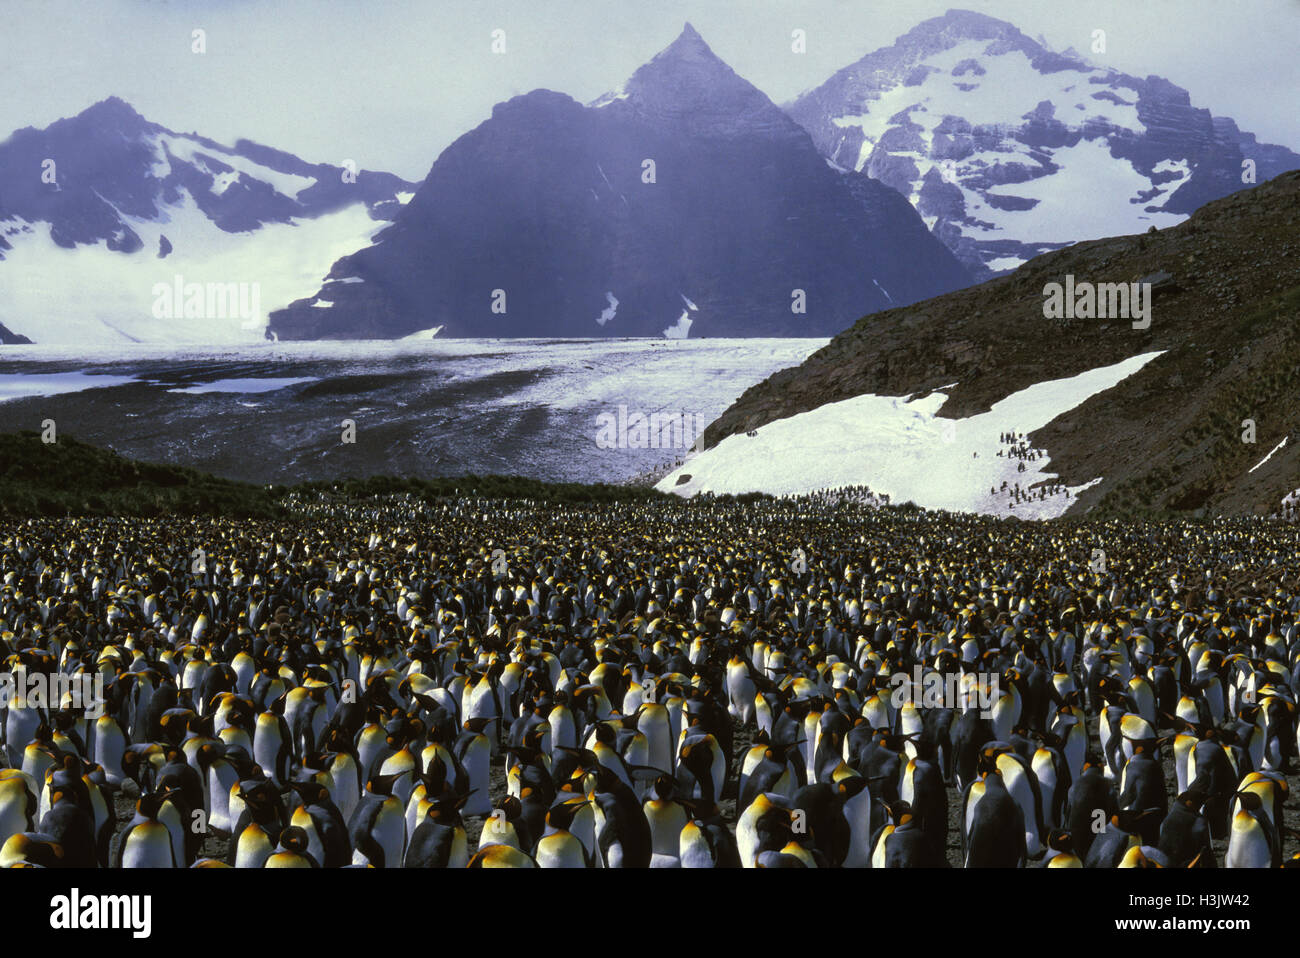 King penguin (Aptenodytes patagonicus) Stock Photo